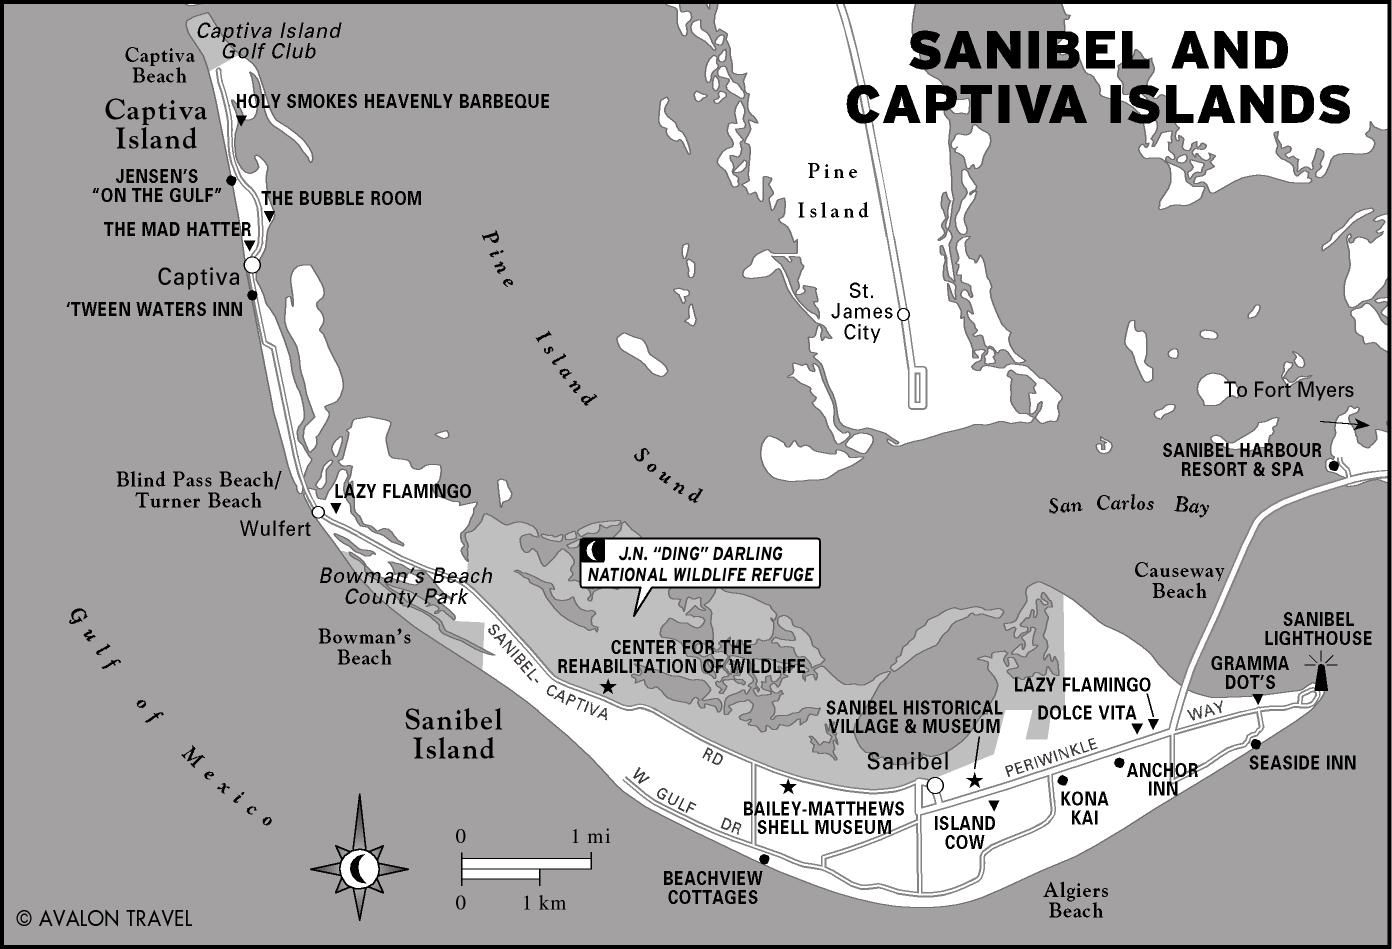 Printable Travel Maps Of Florida And The Gulf Coast | Florida - Road Map Of Sanibel Island Florida